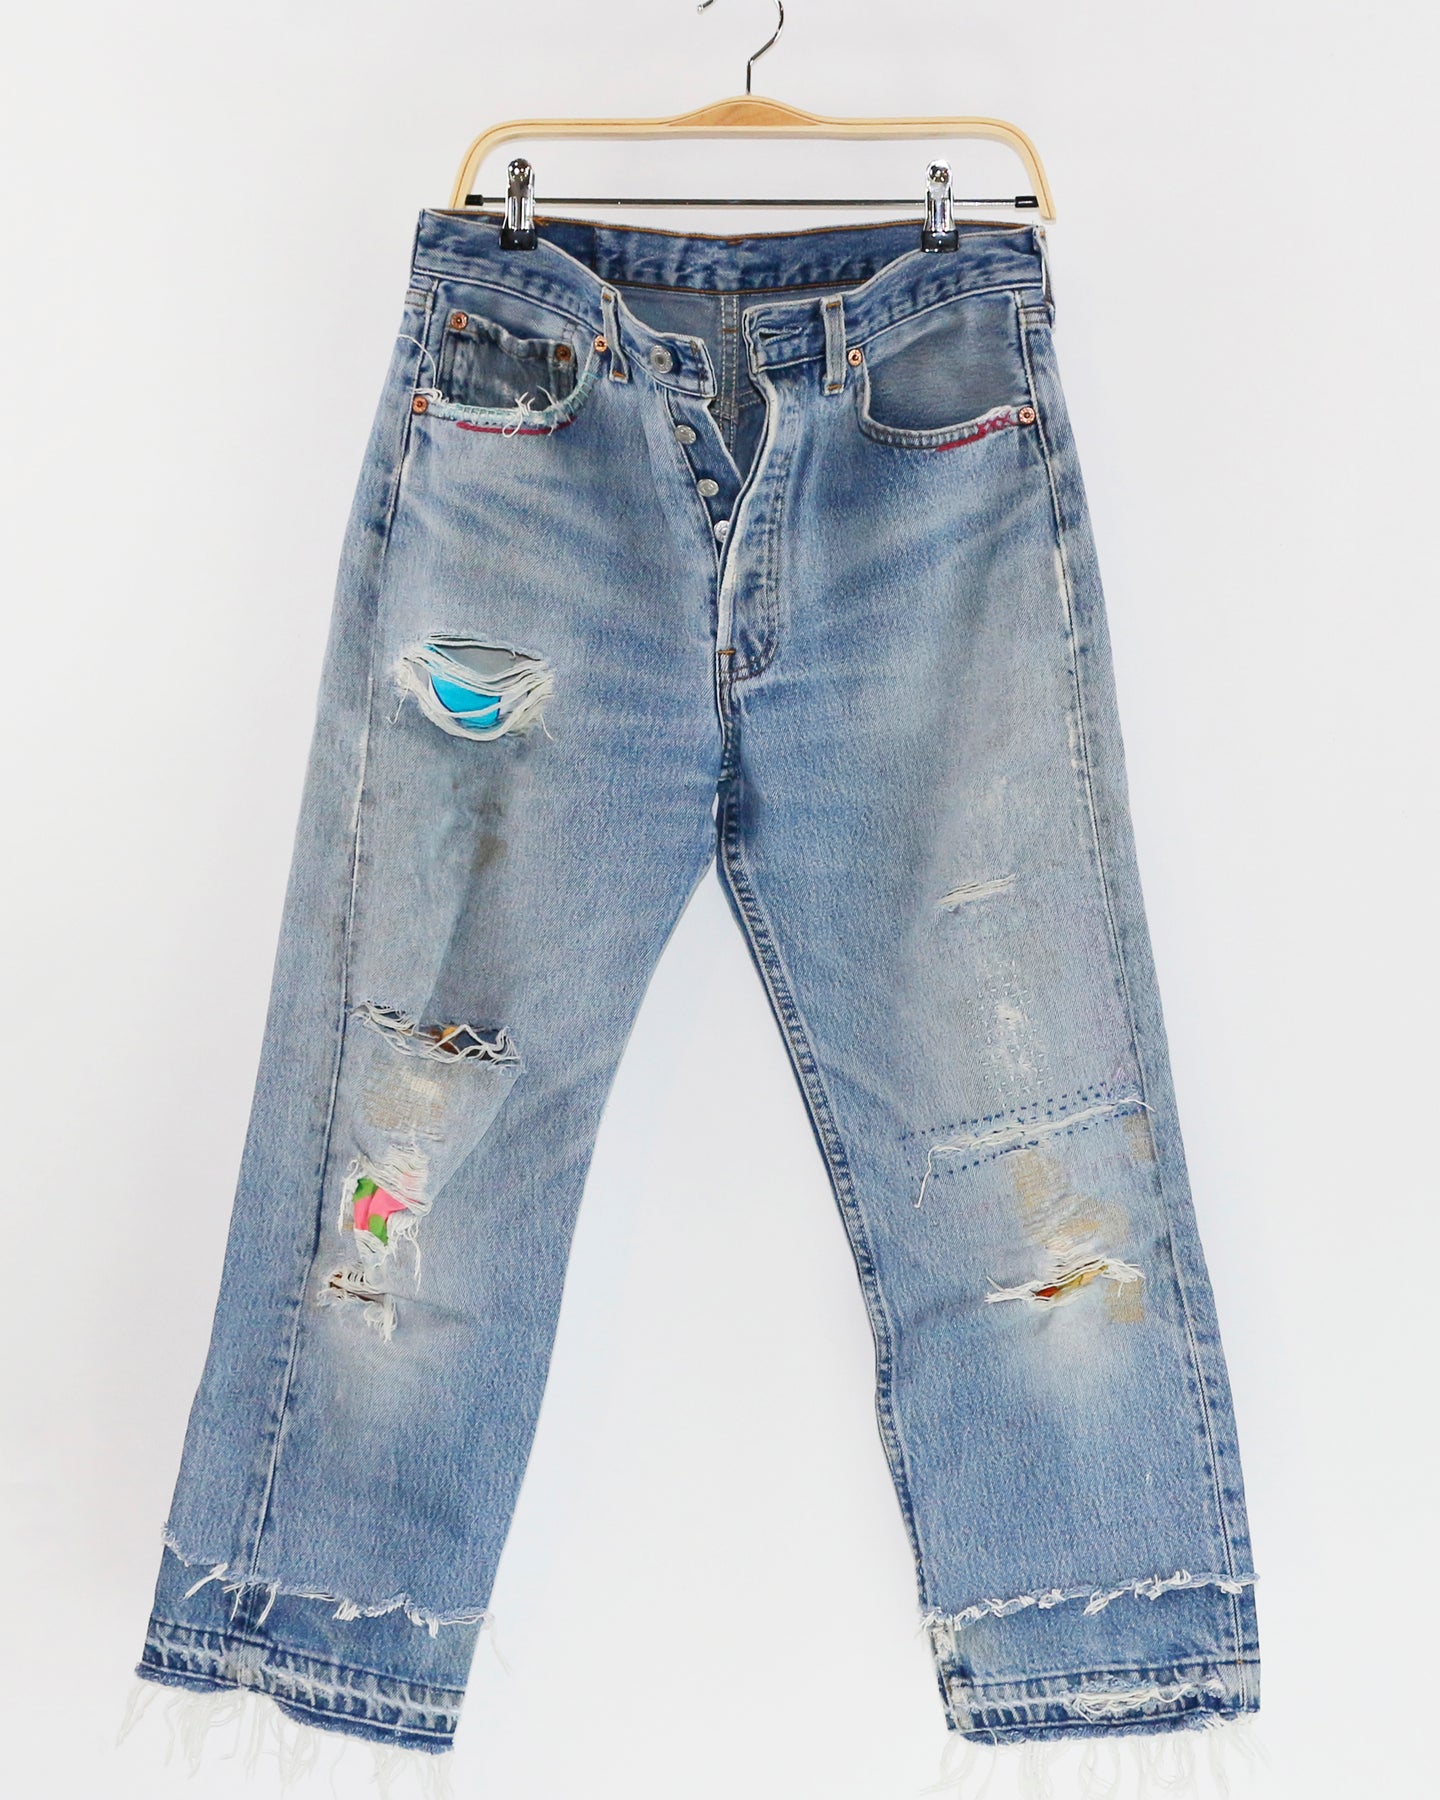 Vintage Levi’s 501, Peek-a-Boo Jeans, fit as women's size 30